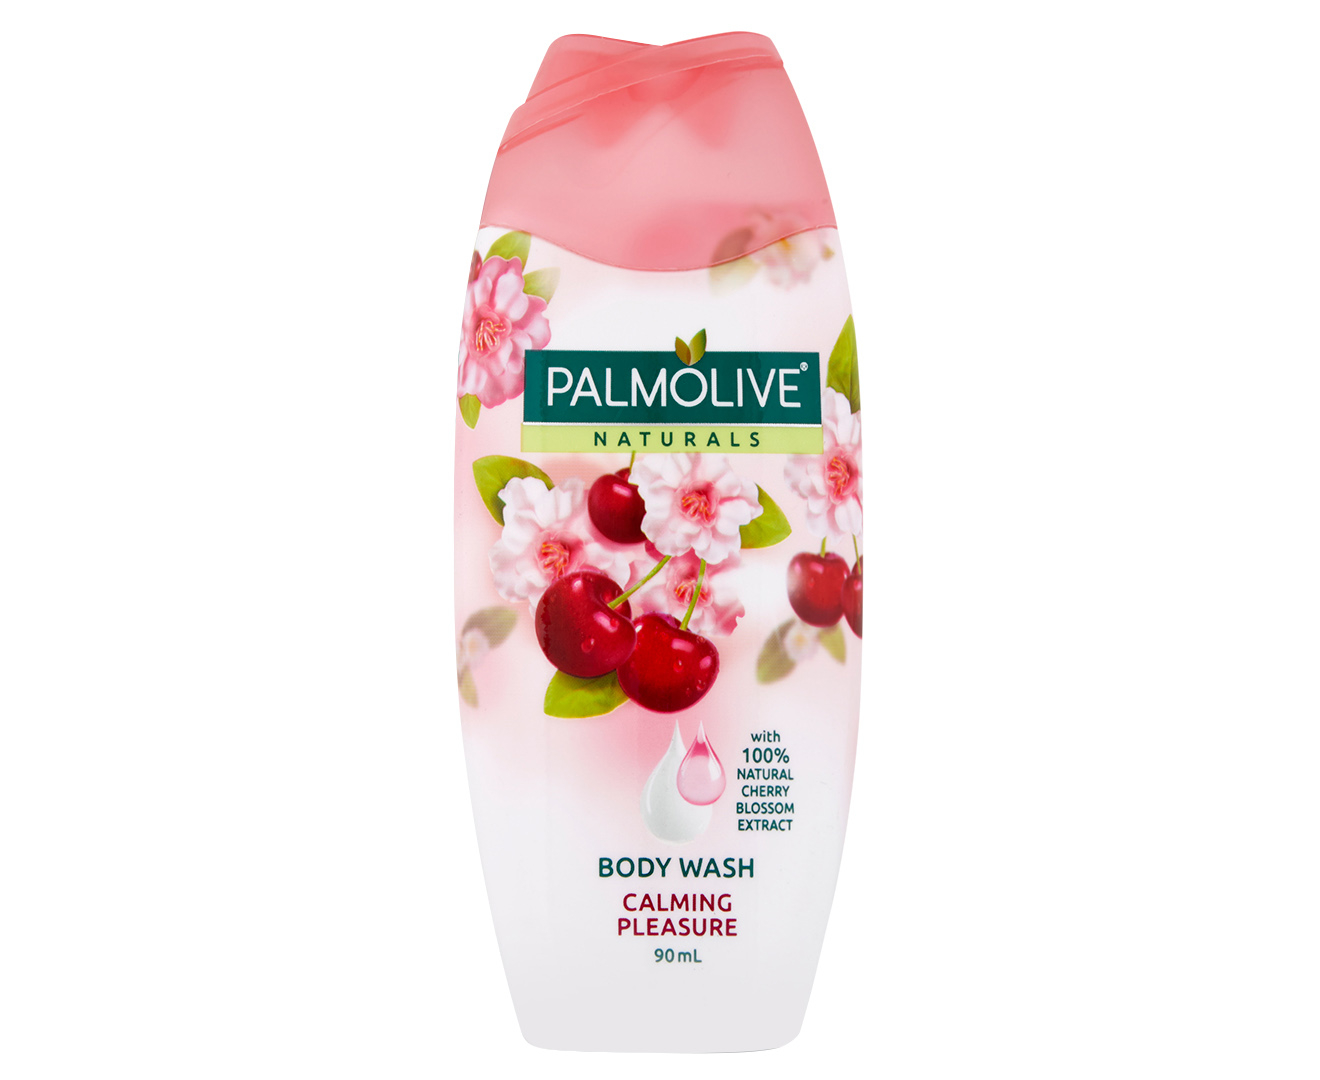 Palmolive Naturals Calming Pleasure Body Wash Milk And Cherry Blossom 90ml Nz